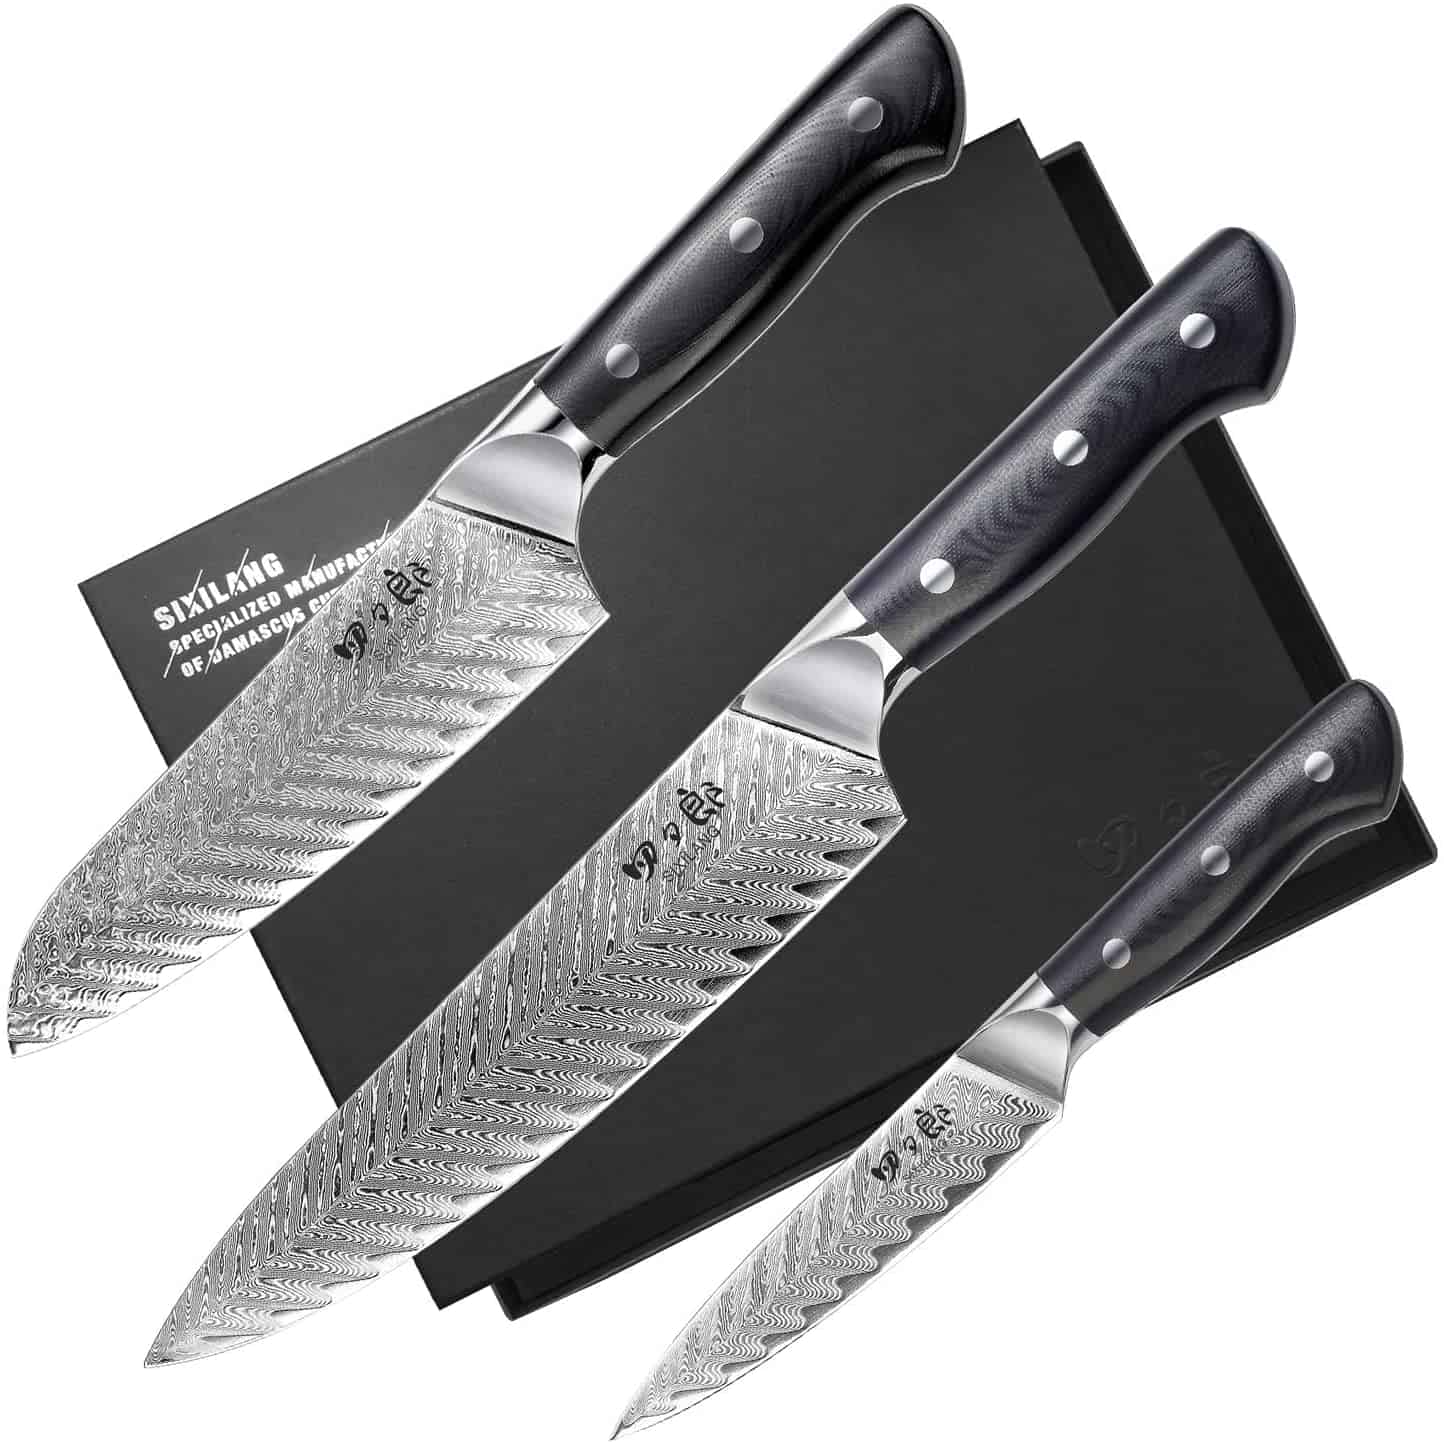 Best budget AUS 10 Japanese steel knife set- SIXILANG Damascus three Kitchen Knives